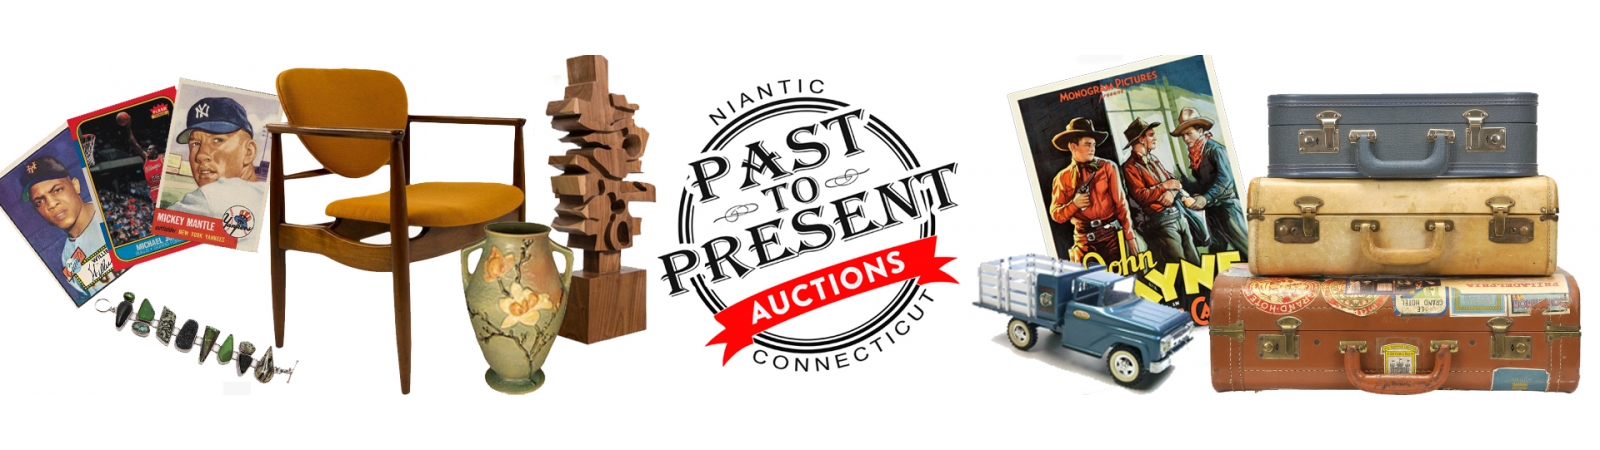 Past to Present, LLC | AuctionNinja